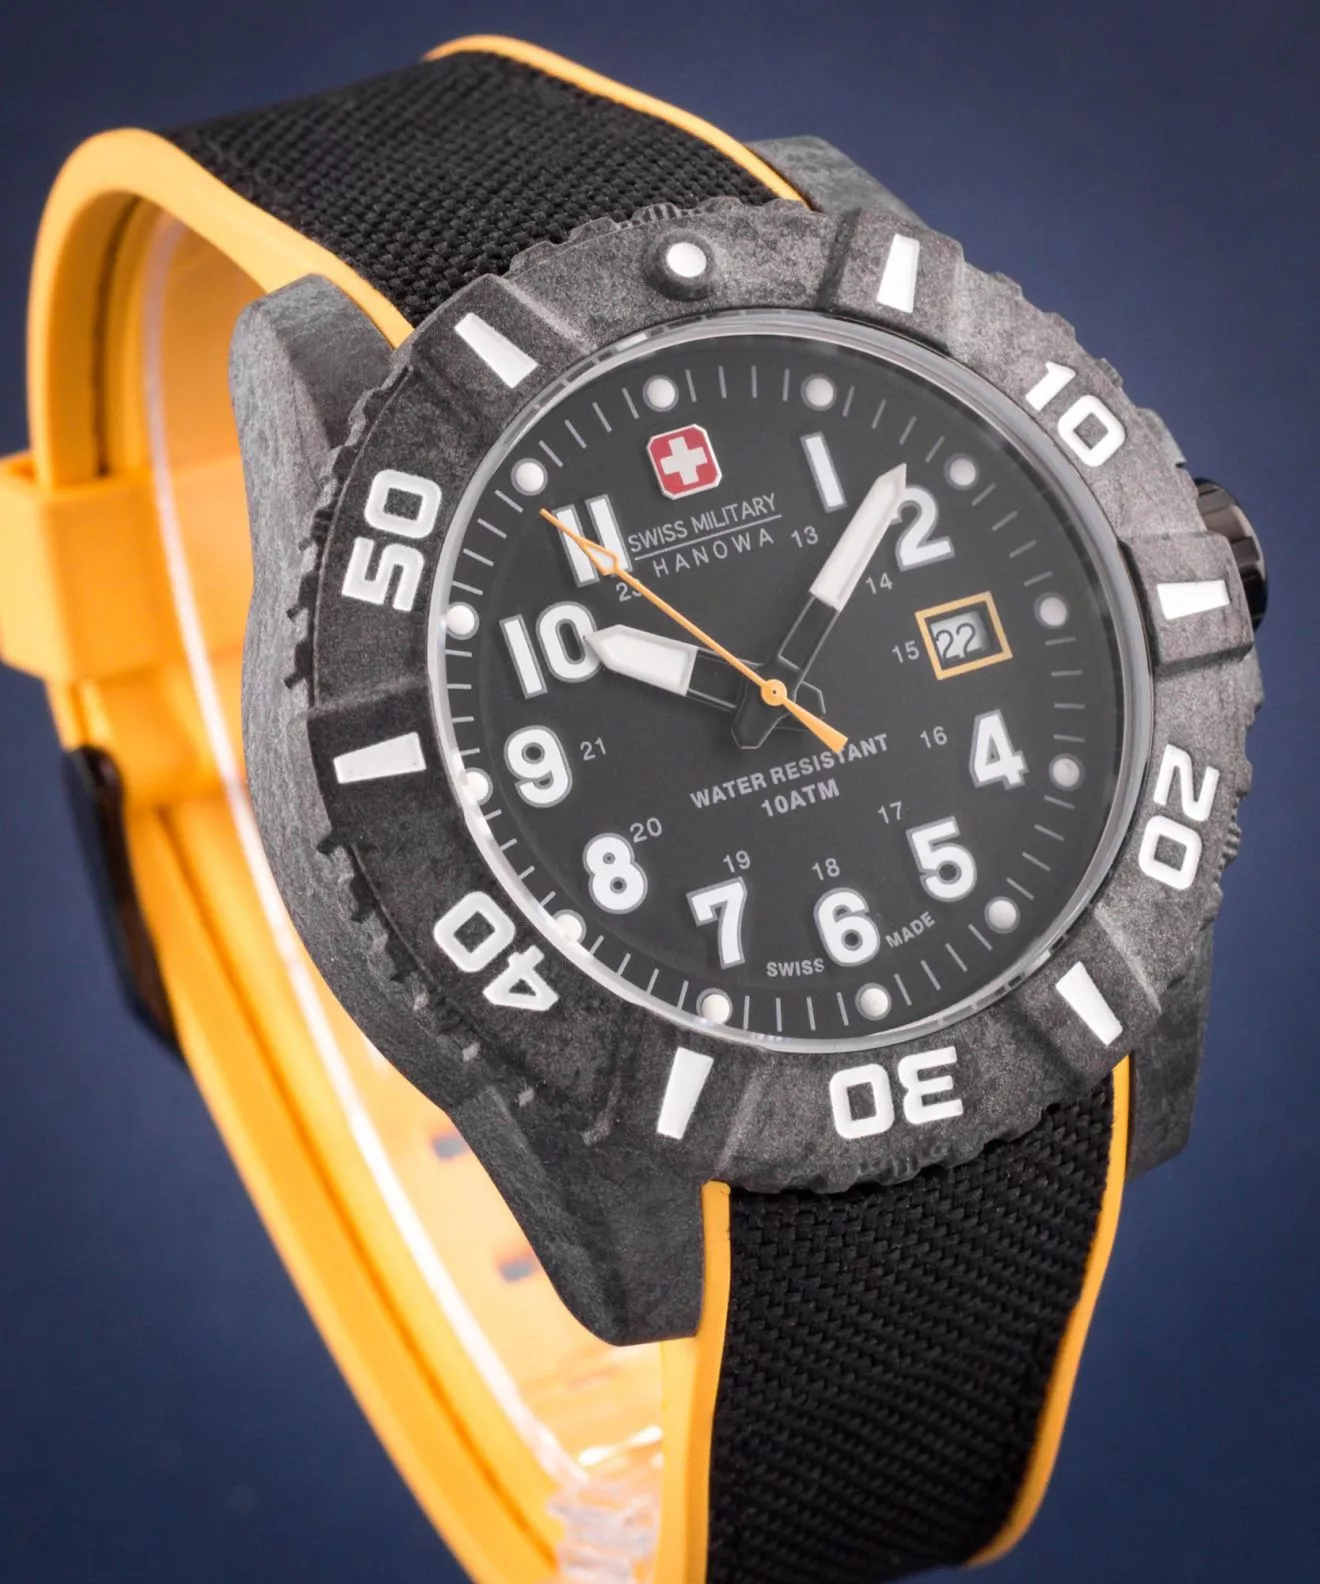 Zegarek męski Swiss Military Hanowa Black Carbon 06-4309.17.007.79